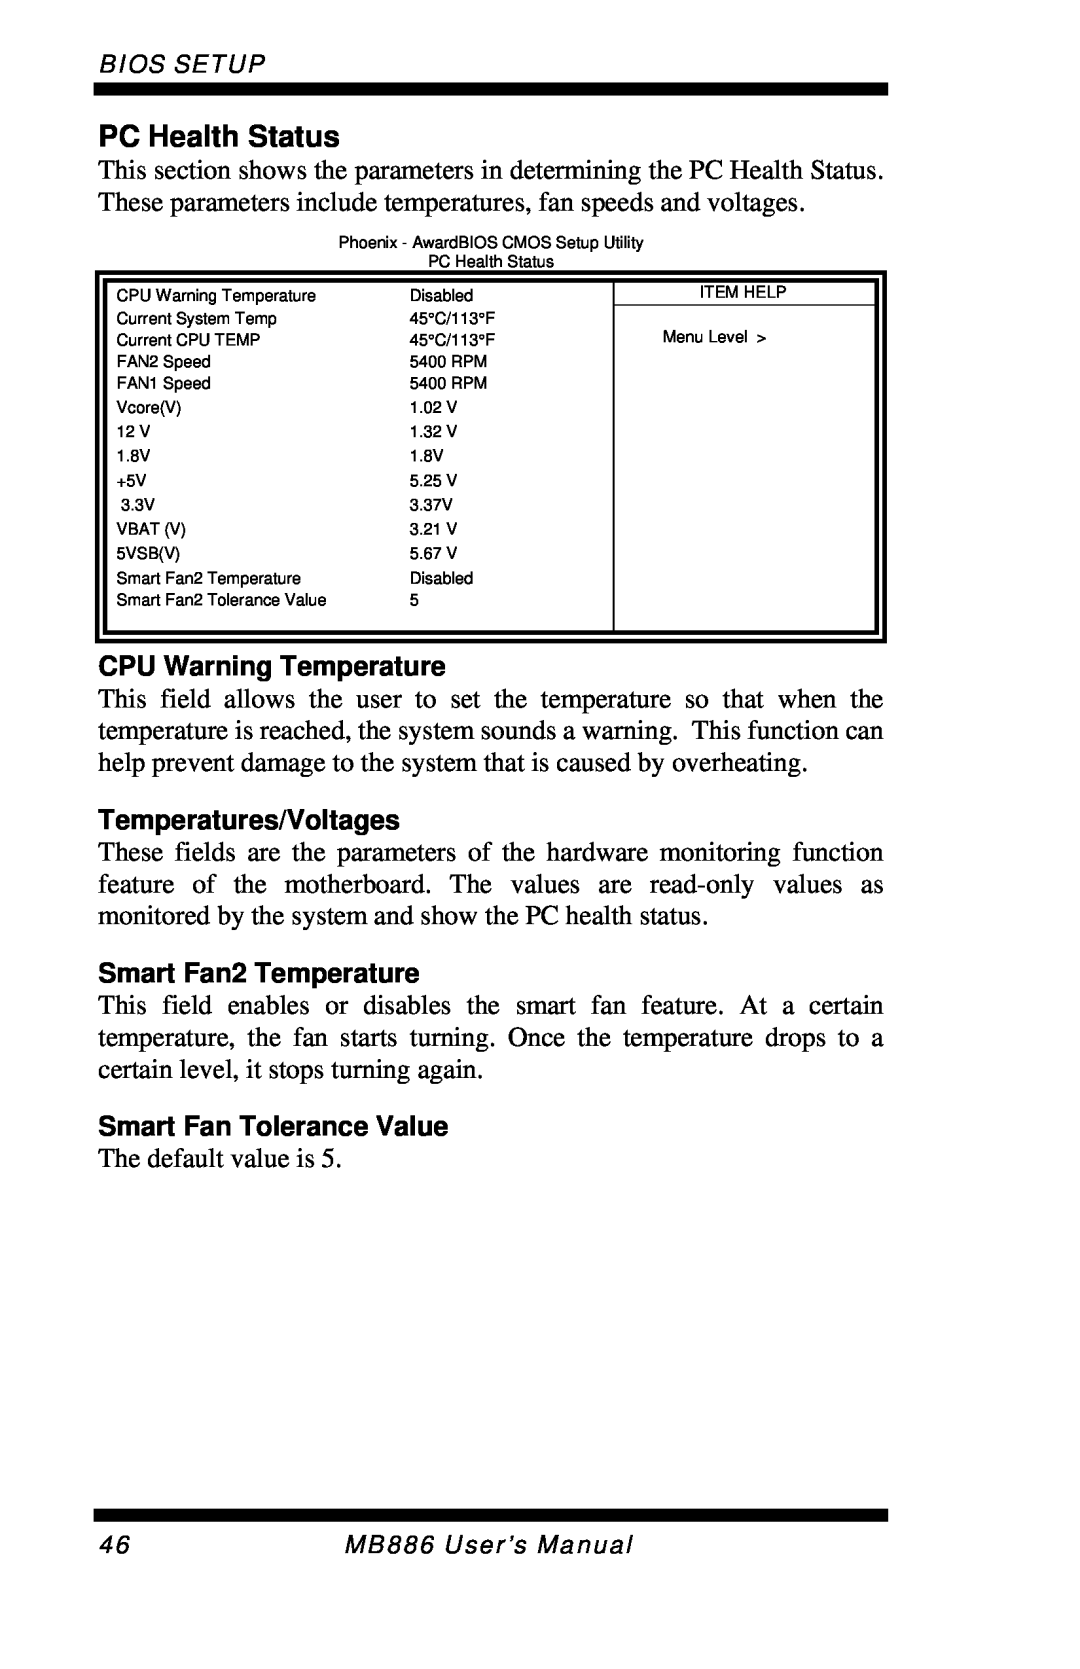 Intel MB886 user manual PC Health Status, CPU Warning Temperature, Temperatures/Voltages, Smart Fan2 Temperature 